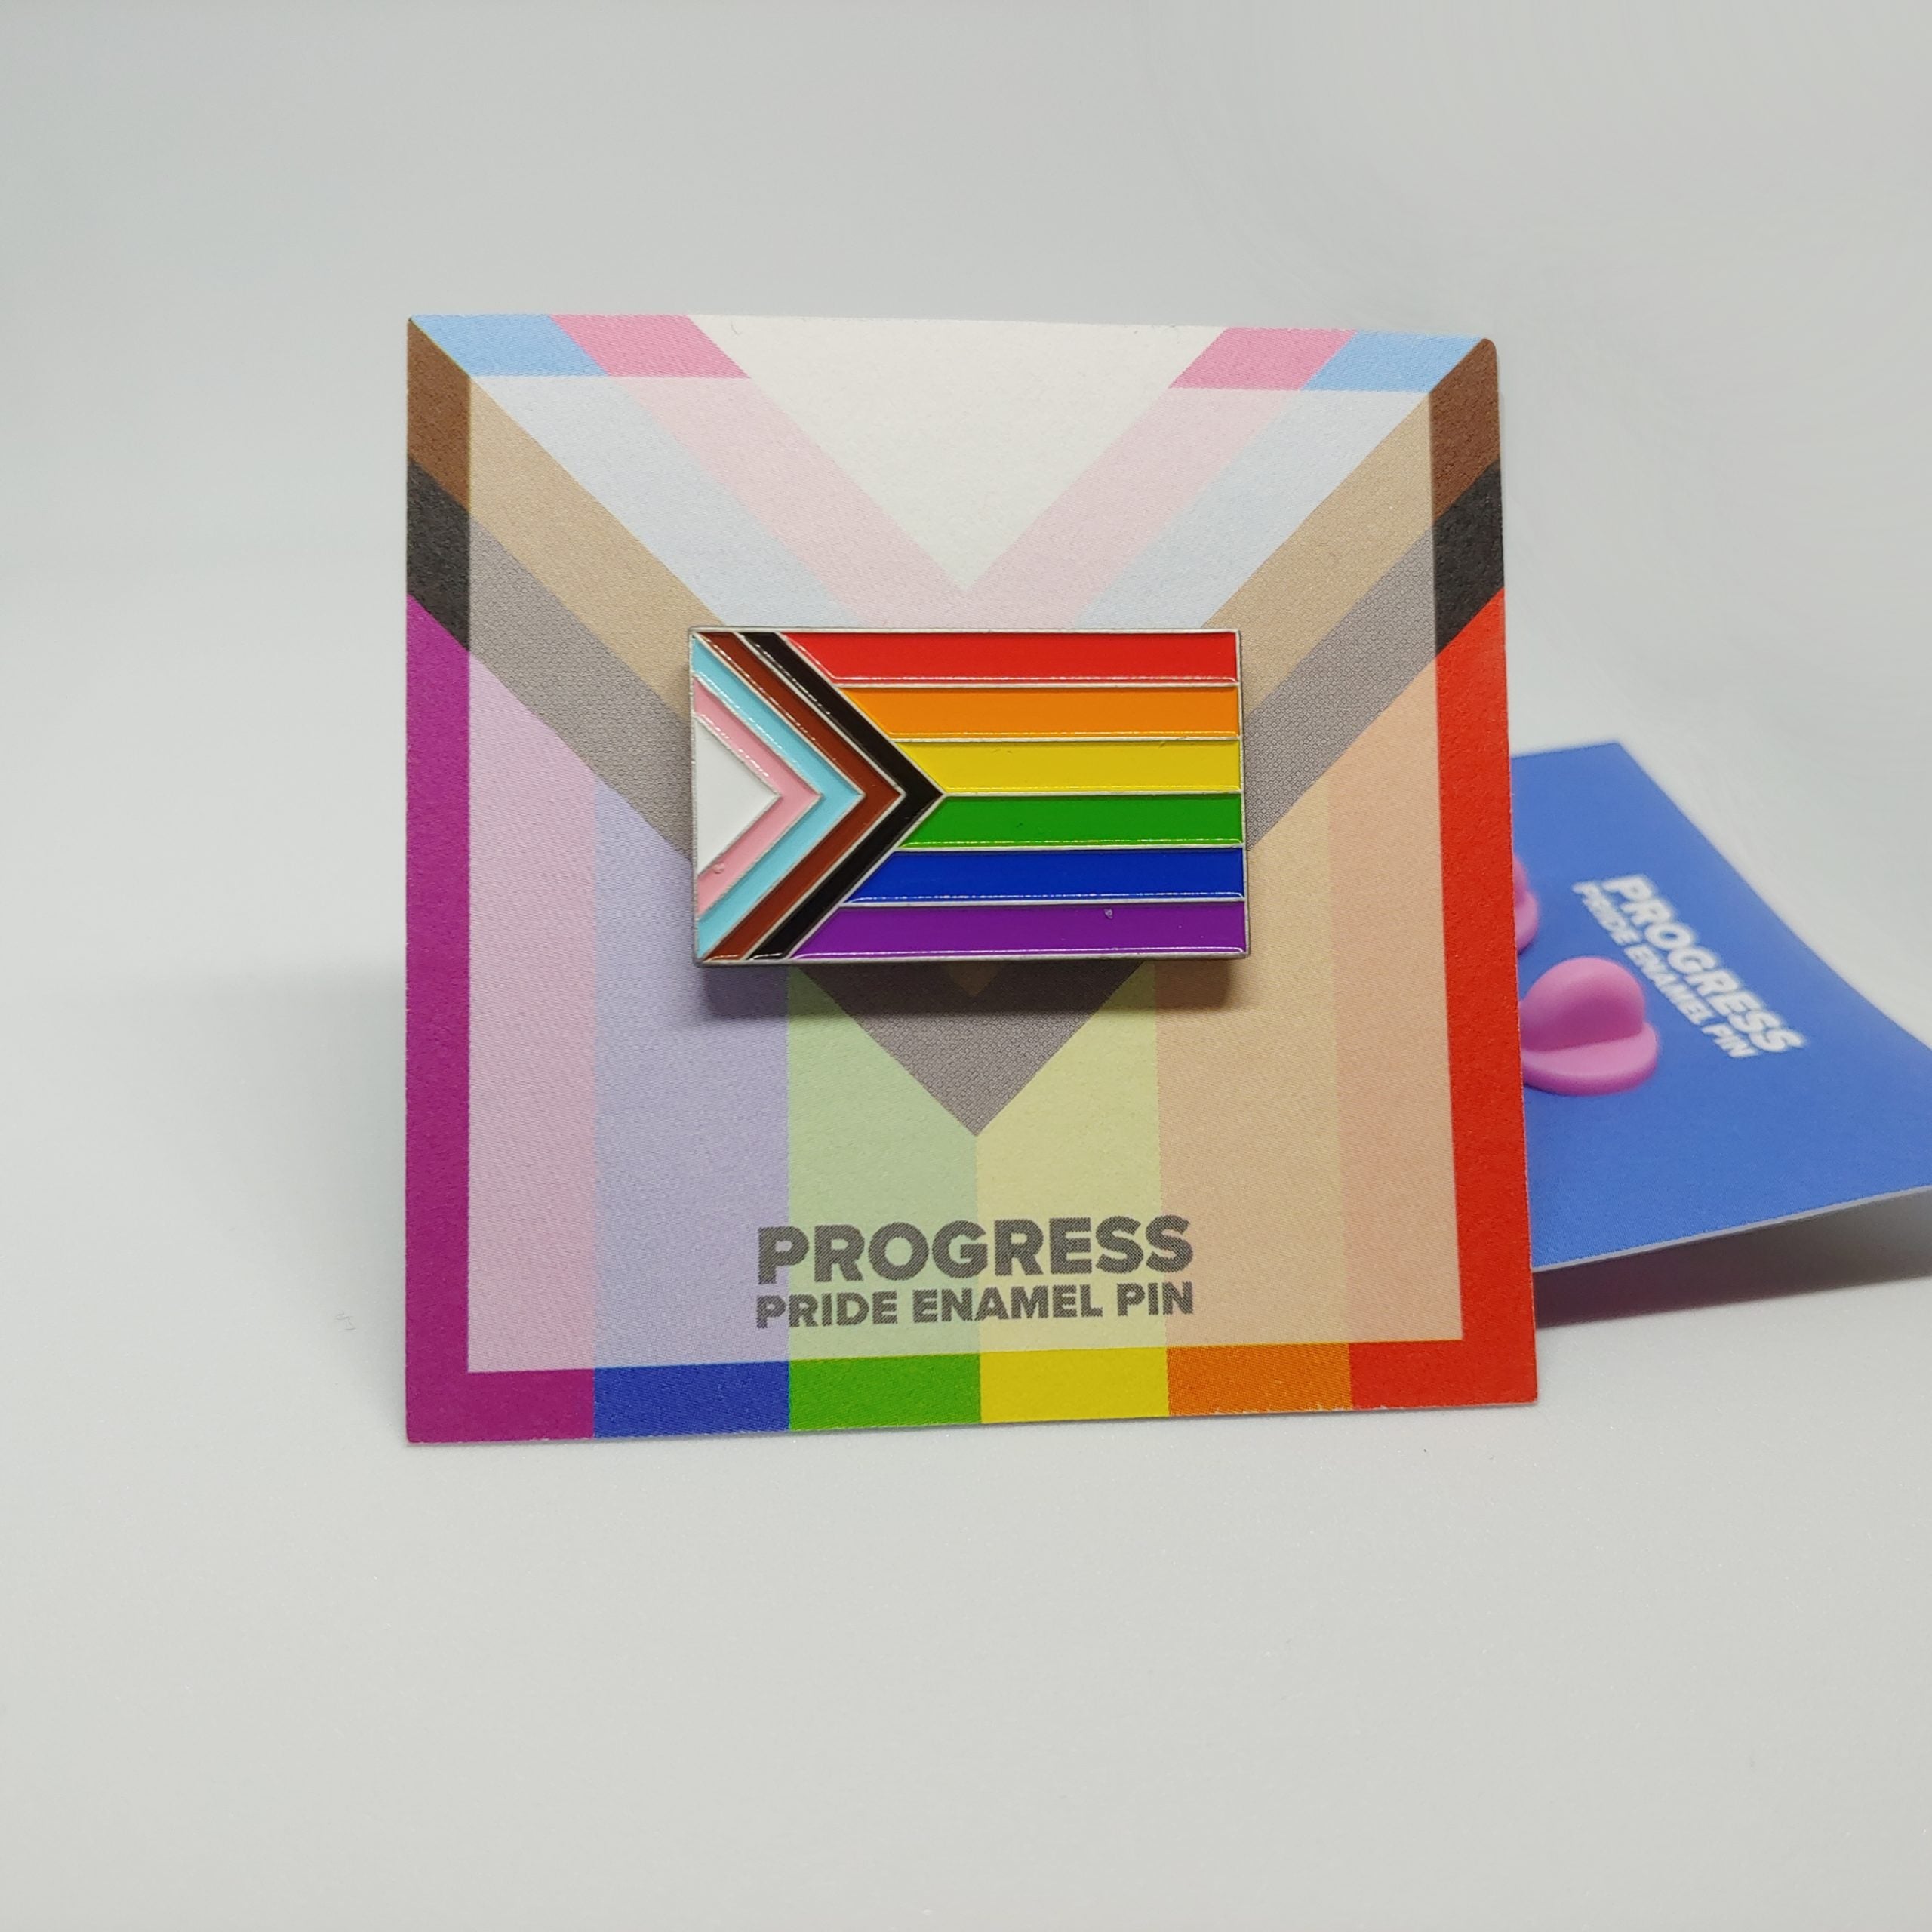 "Progress" Pride Enamel Pin